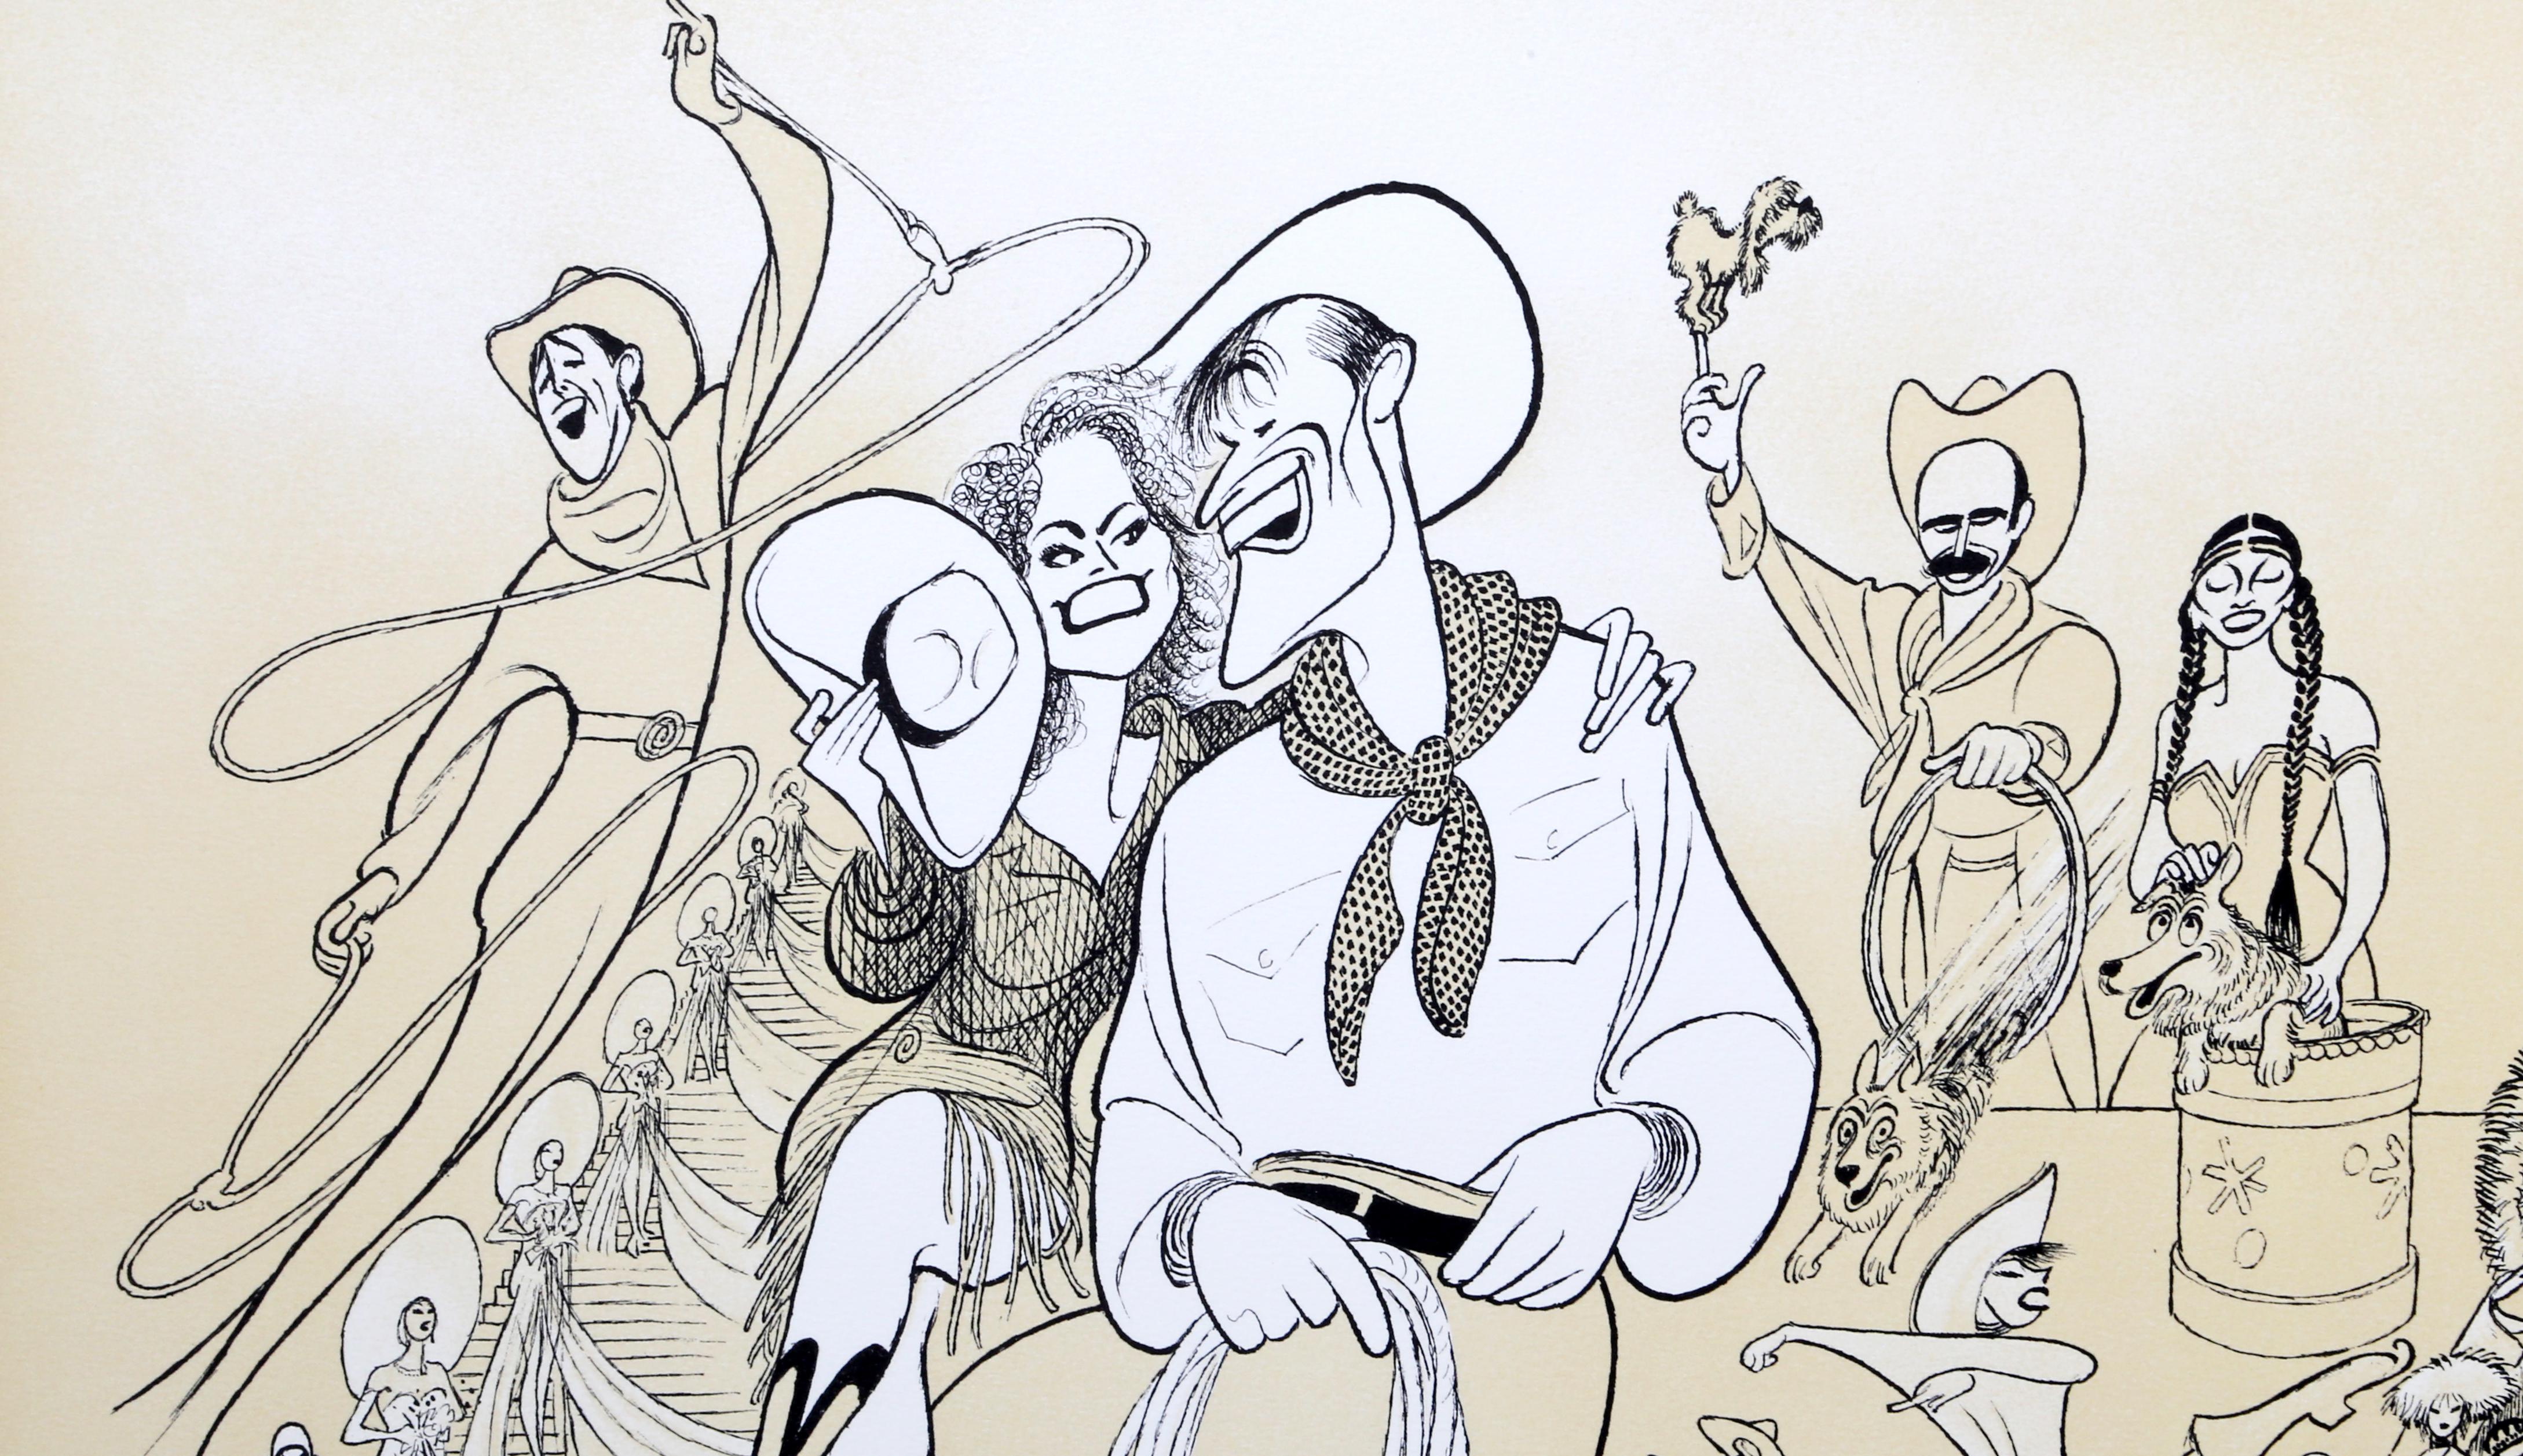 Will Rogers, lithographie de caricature d'Al Hirschfeld - Print de Albert Al Hirschfeld